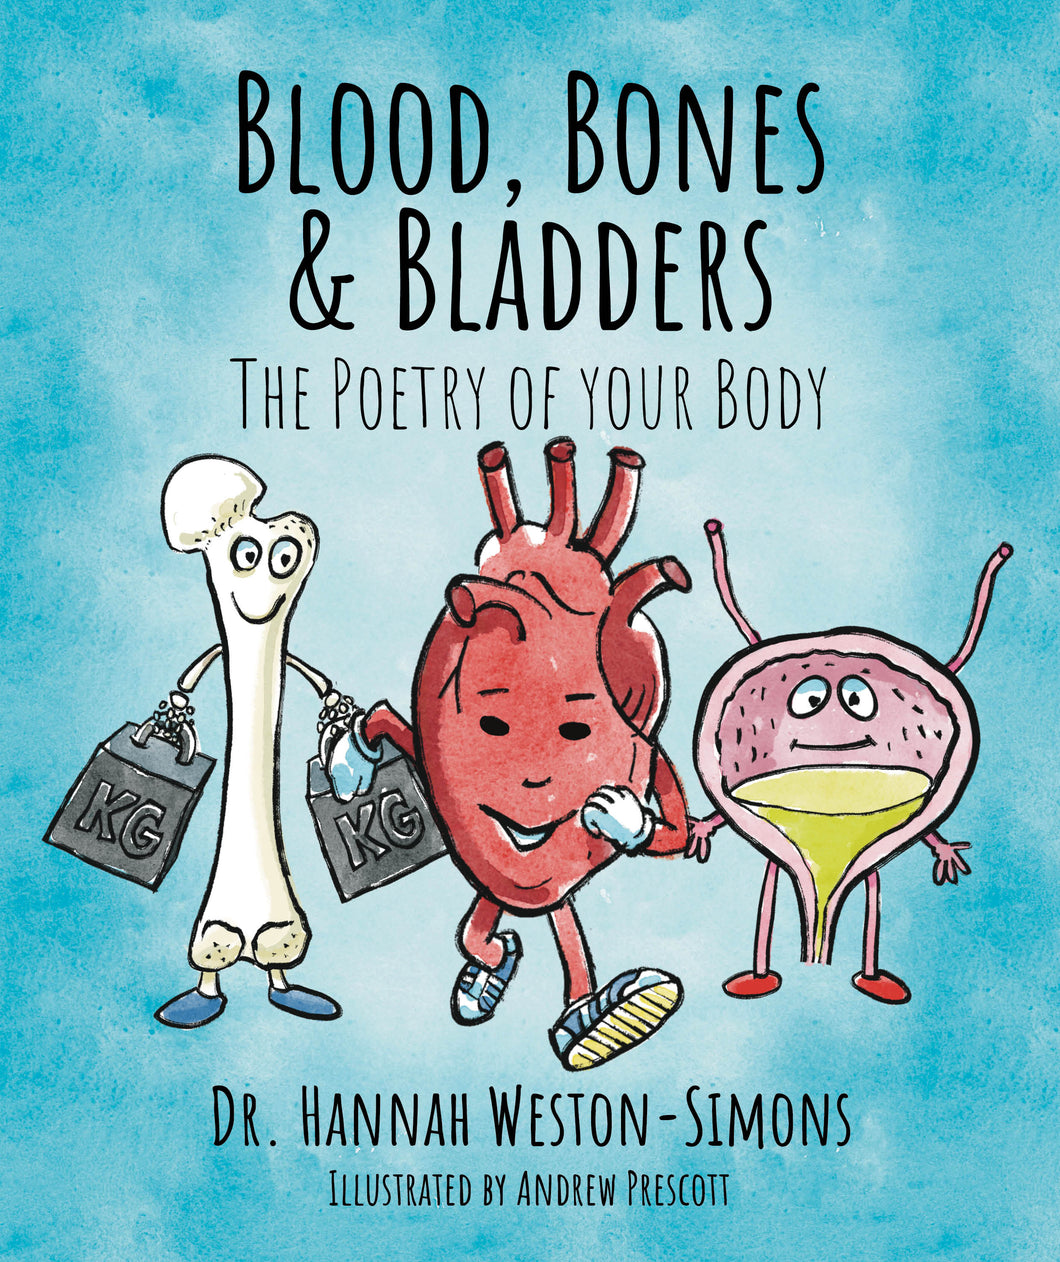 Blood, Bones & Bladders: The Poetry of Your Body